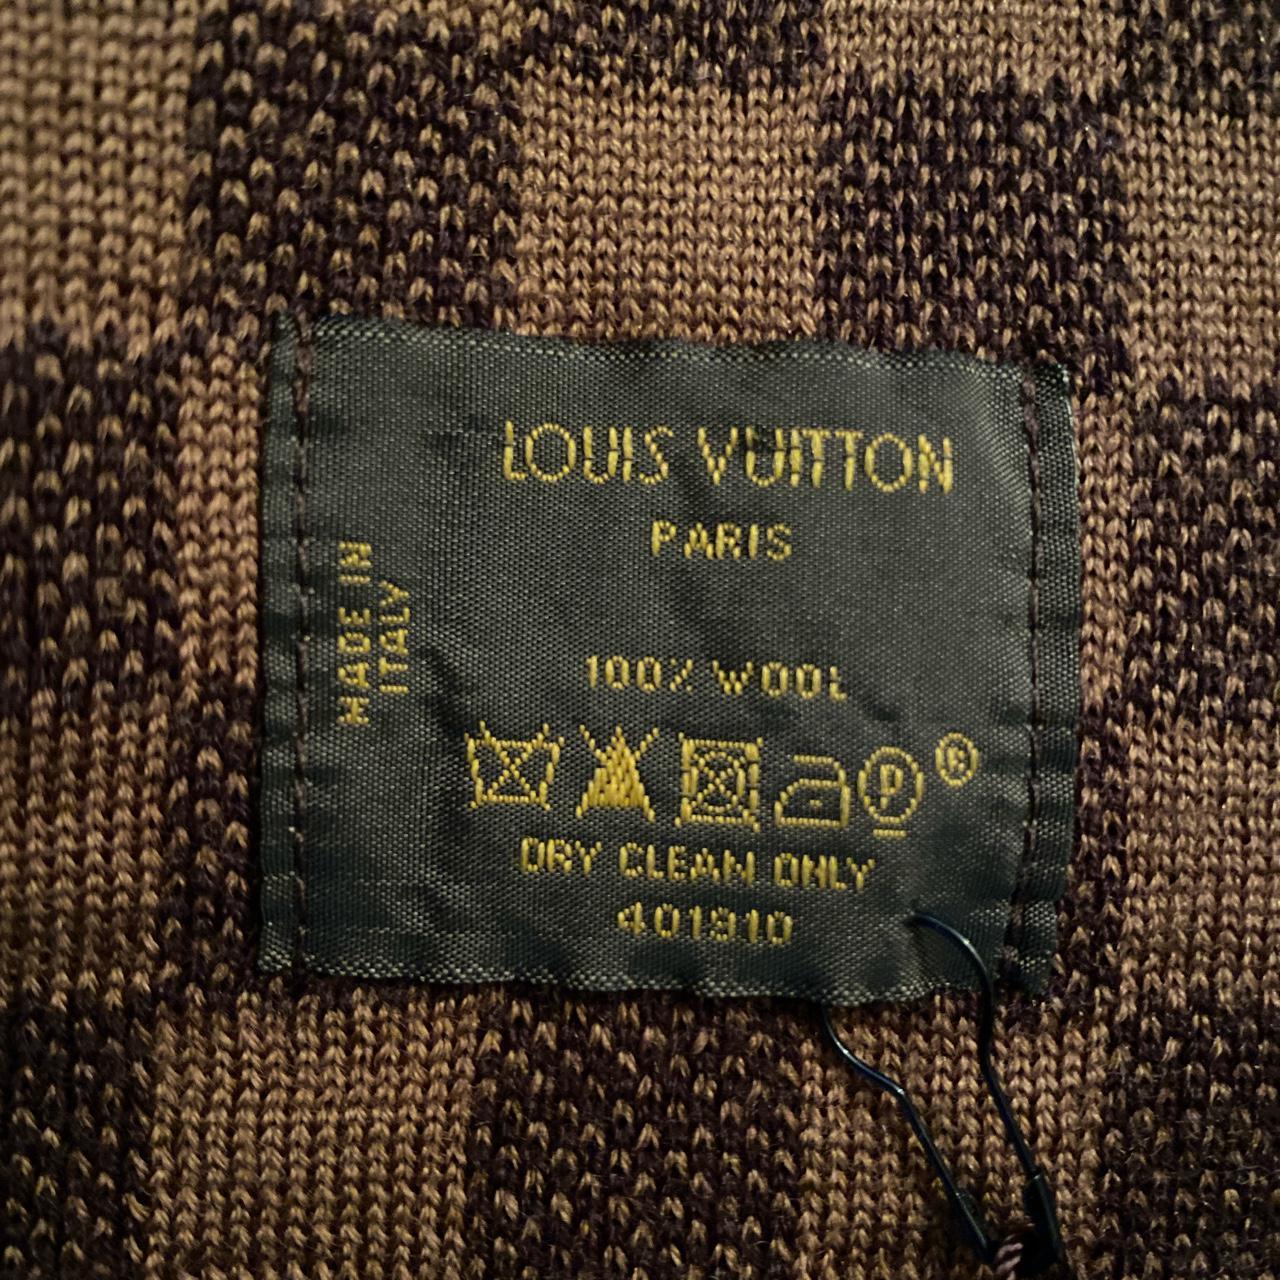 Louis Vuitton Logomania scarf for sale. Such a - Depop